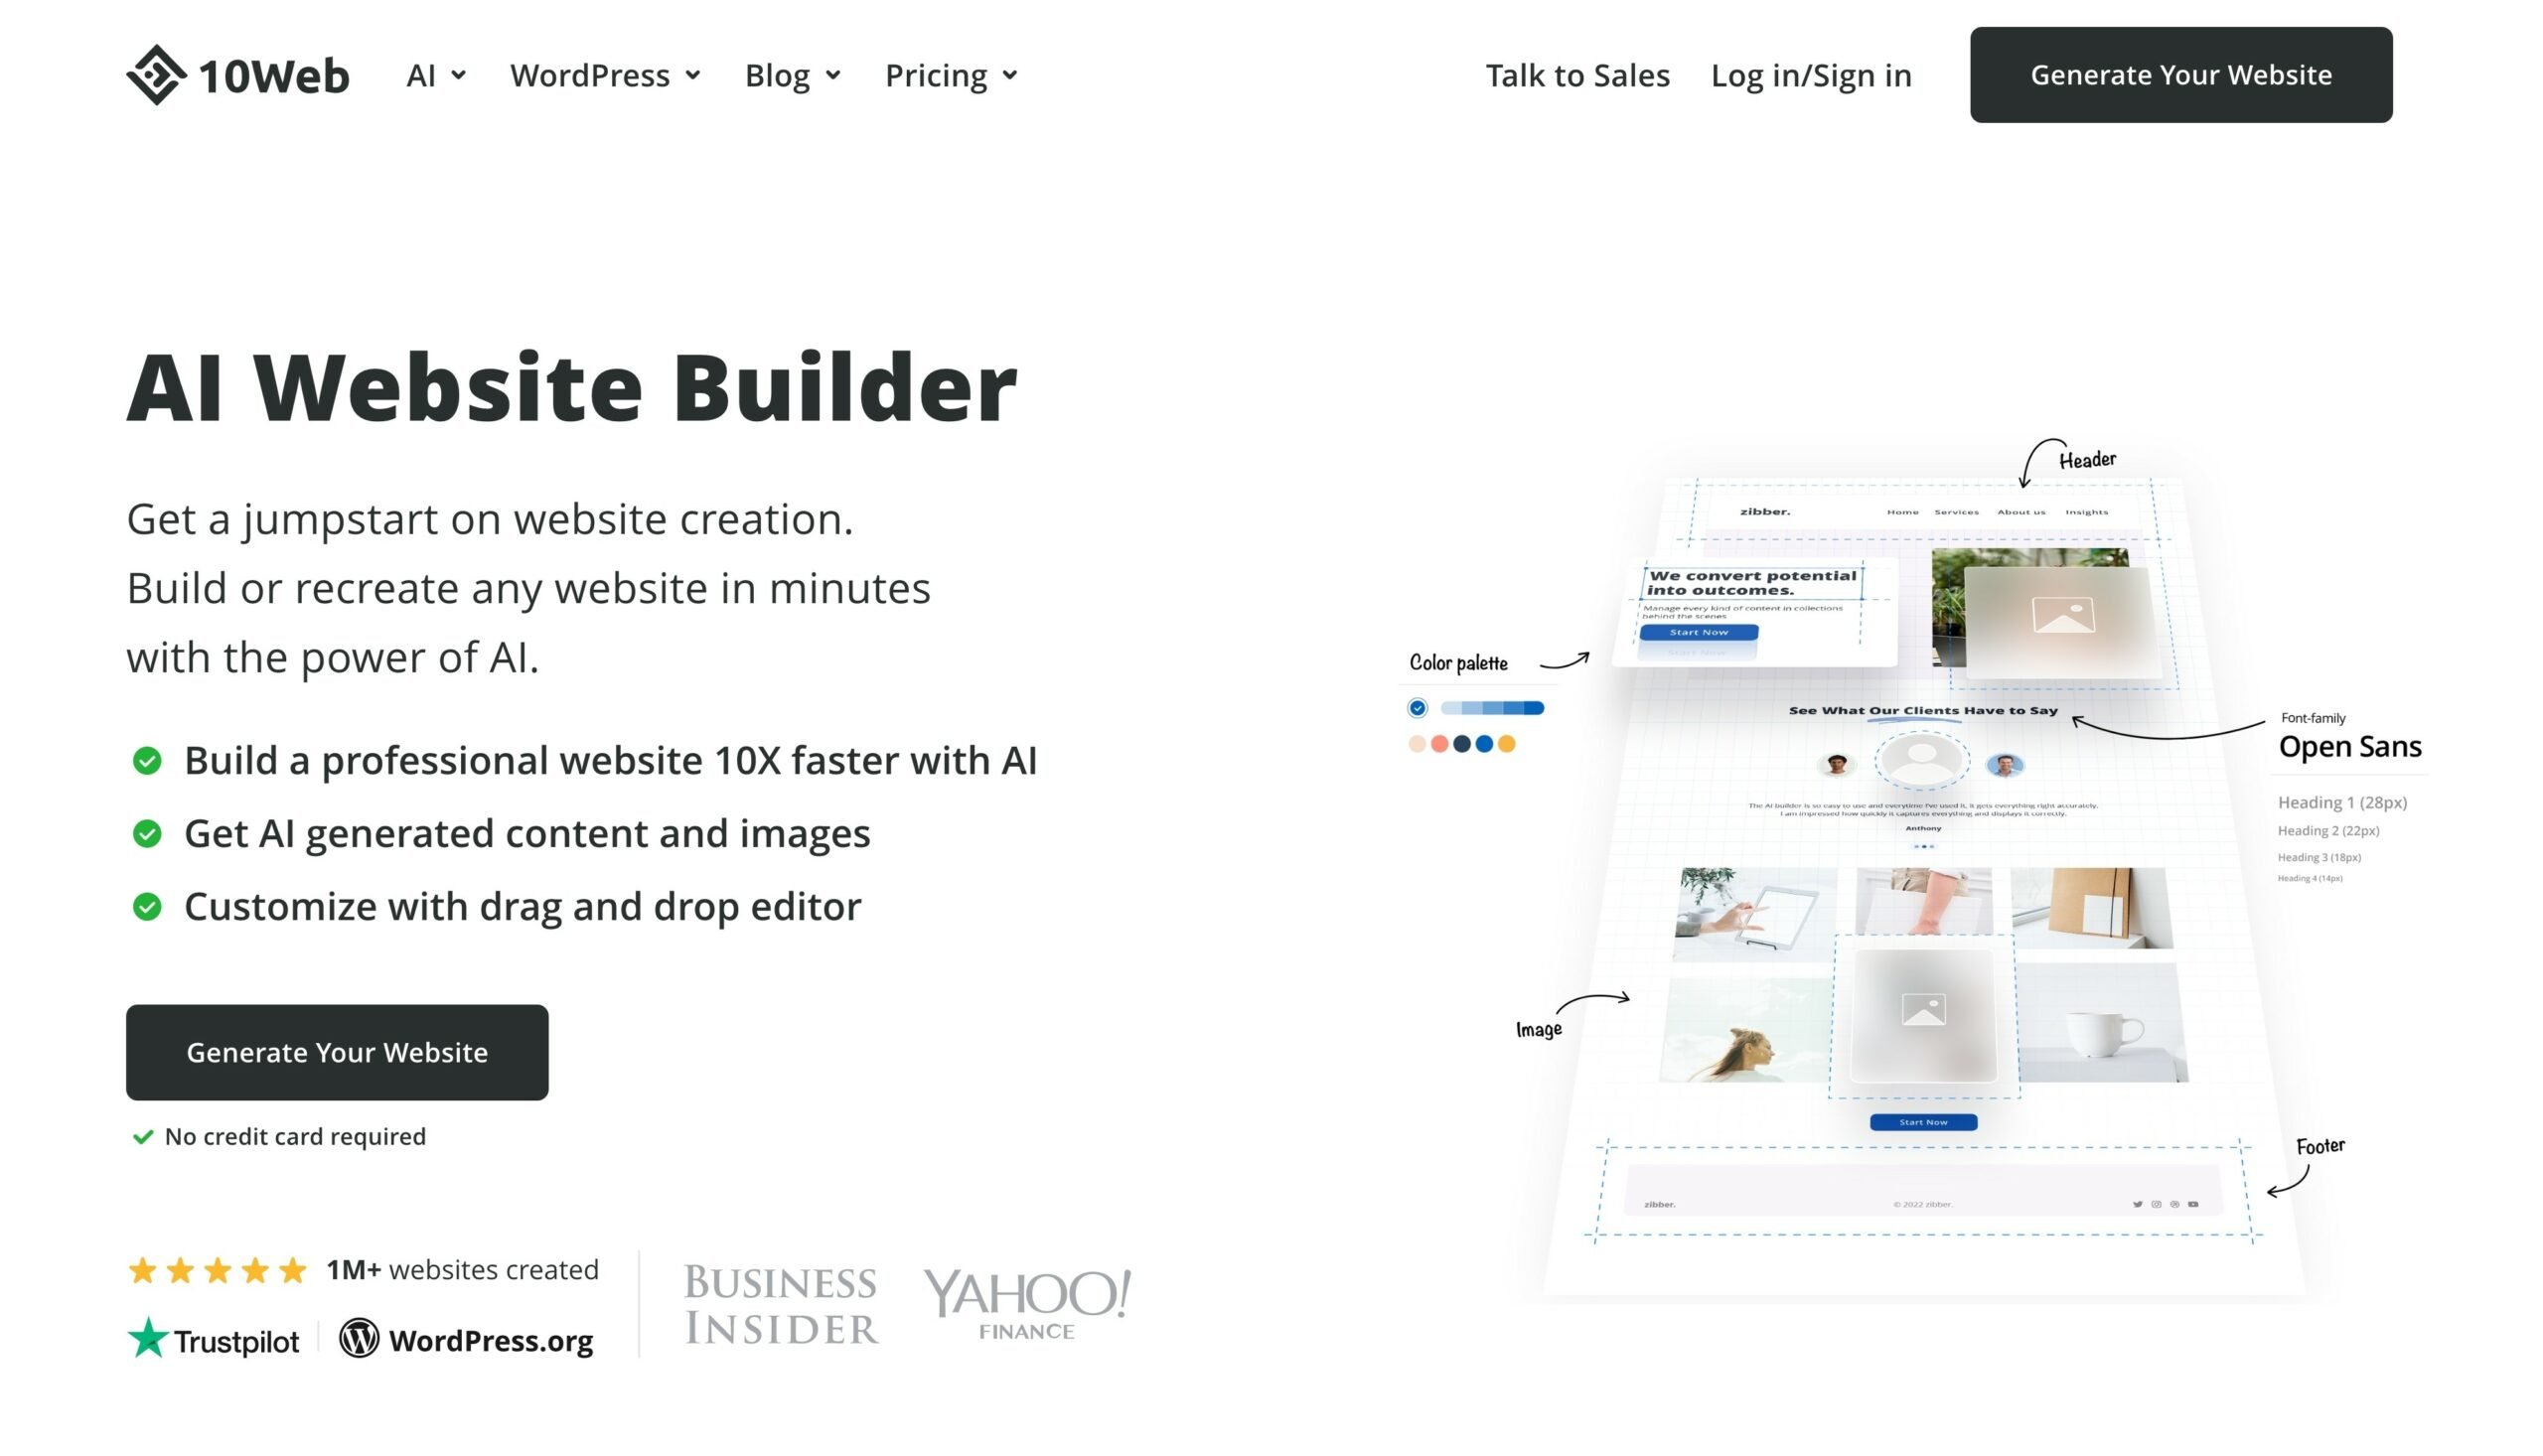 DIY Websites: 10 Web Design Tips That Make Your Site Look Professional